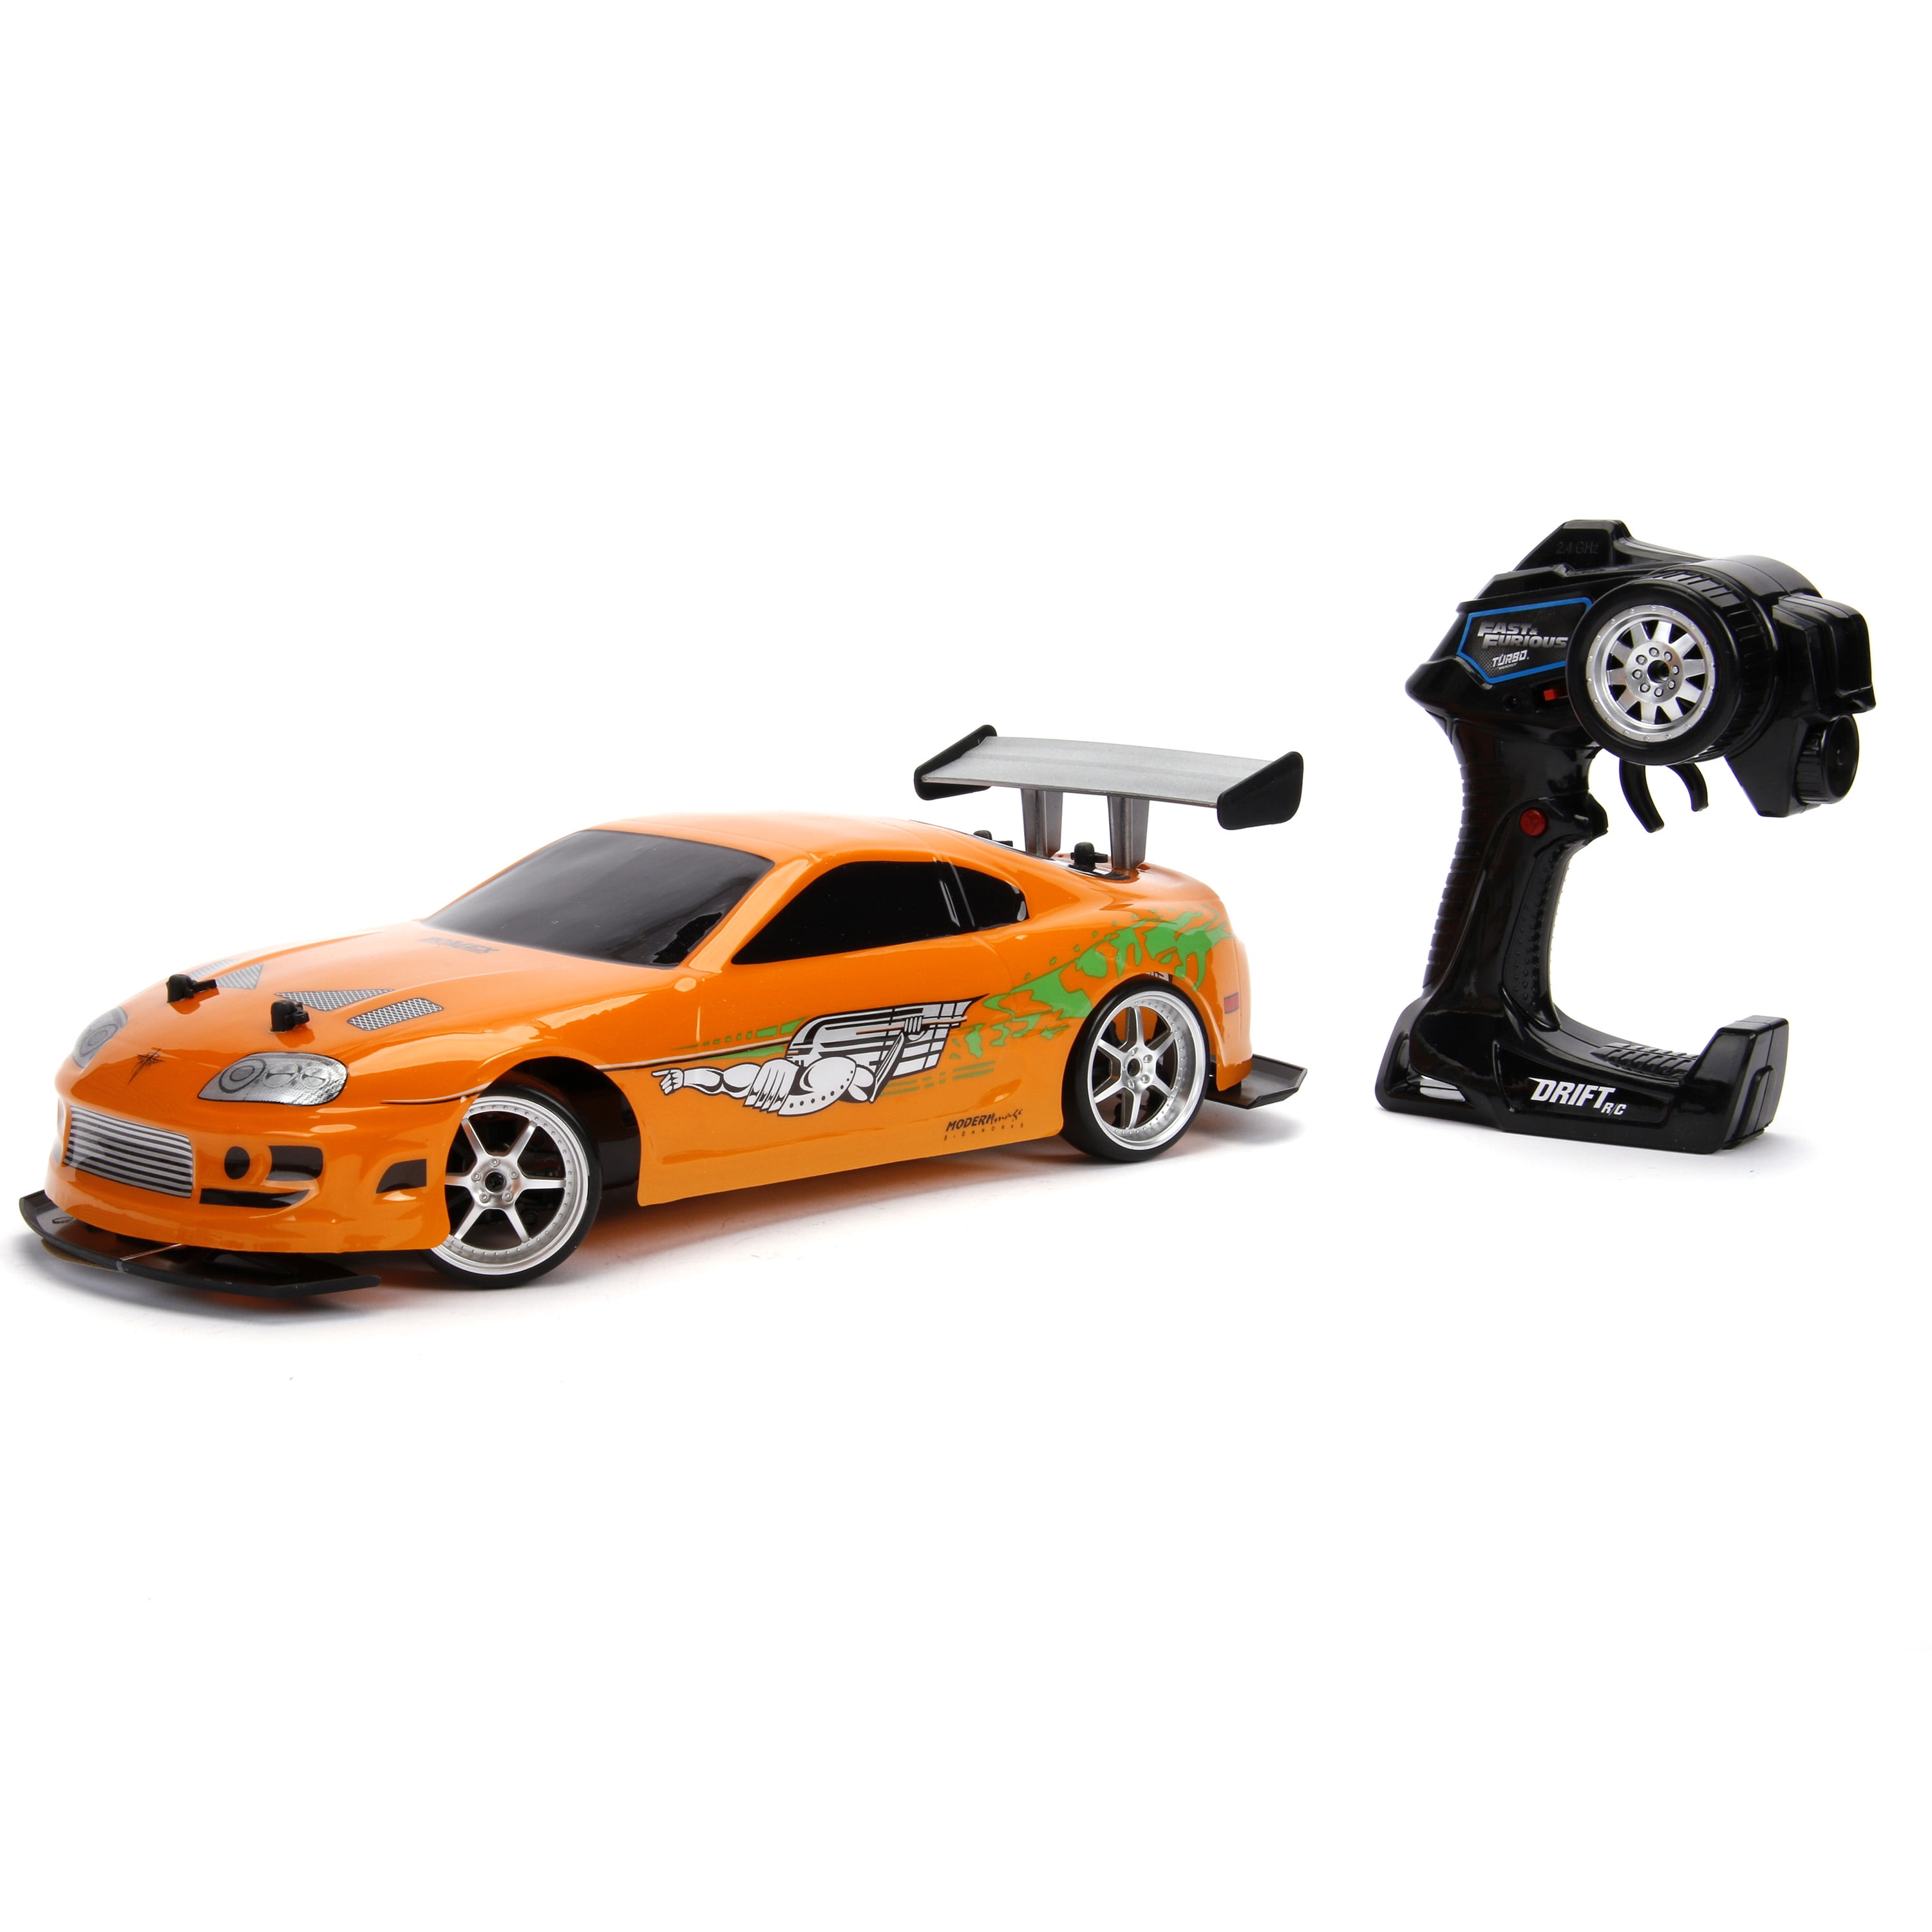 Fast and Furious 1:24 Radio Control Jada Toys Brian's Toyota Supra